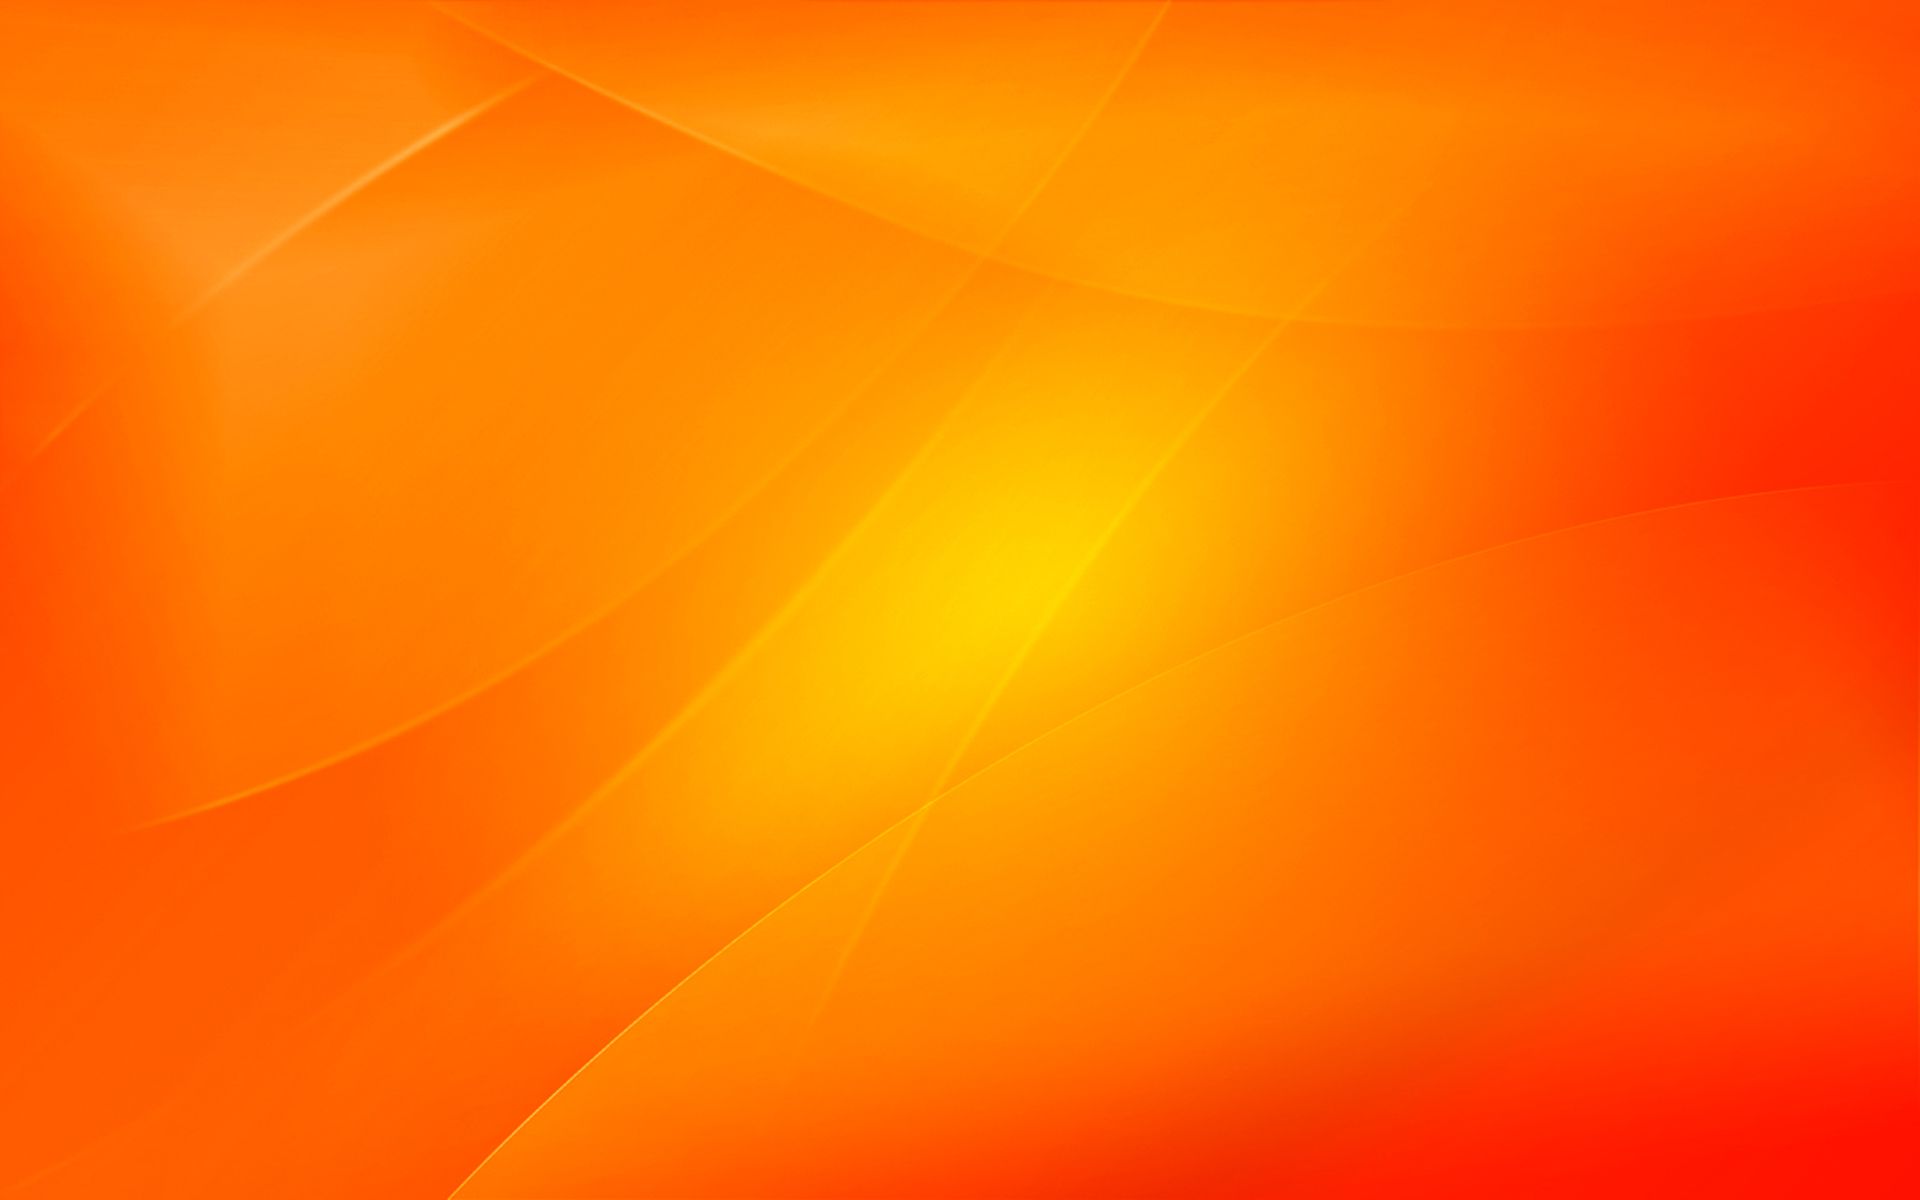 Background Orange. Orange iPhone Wallpaper, Orange Flower Wallpaper and Orange Blue Wallpaper